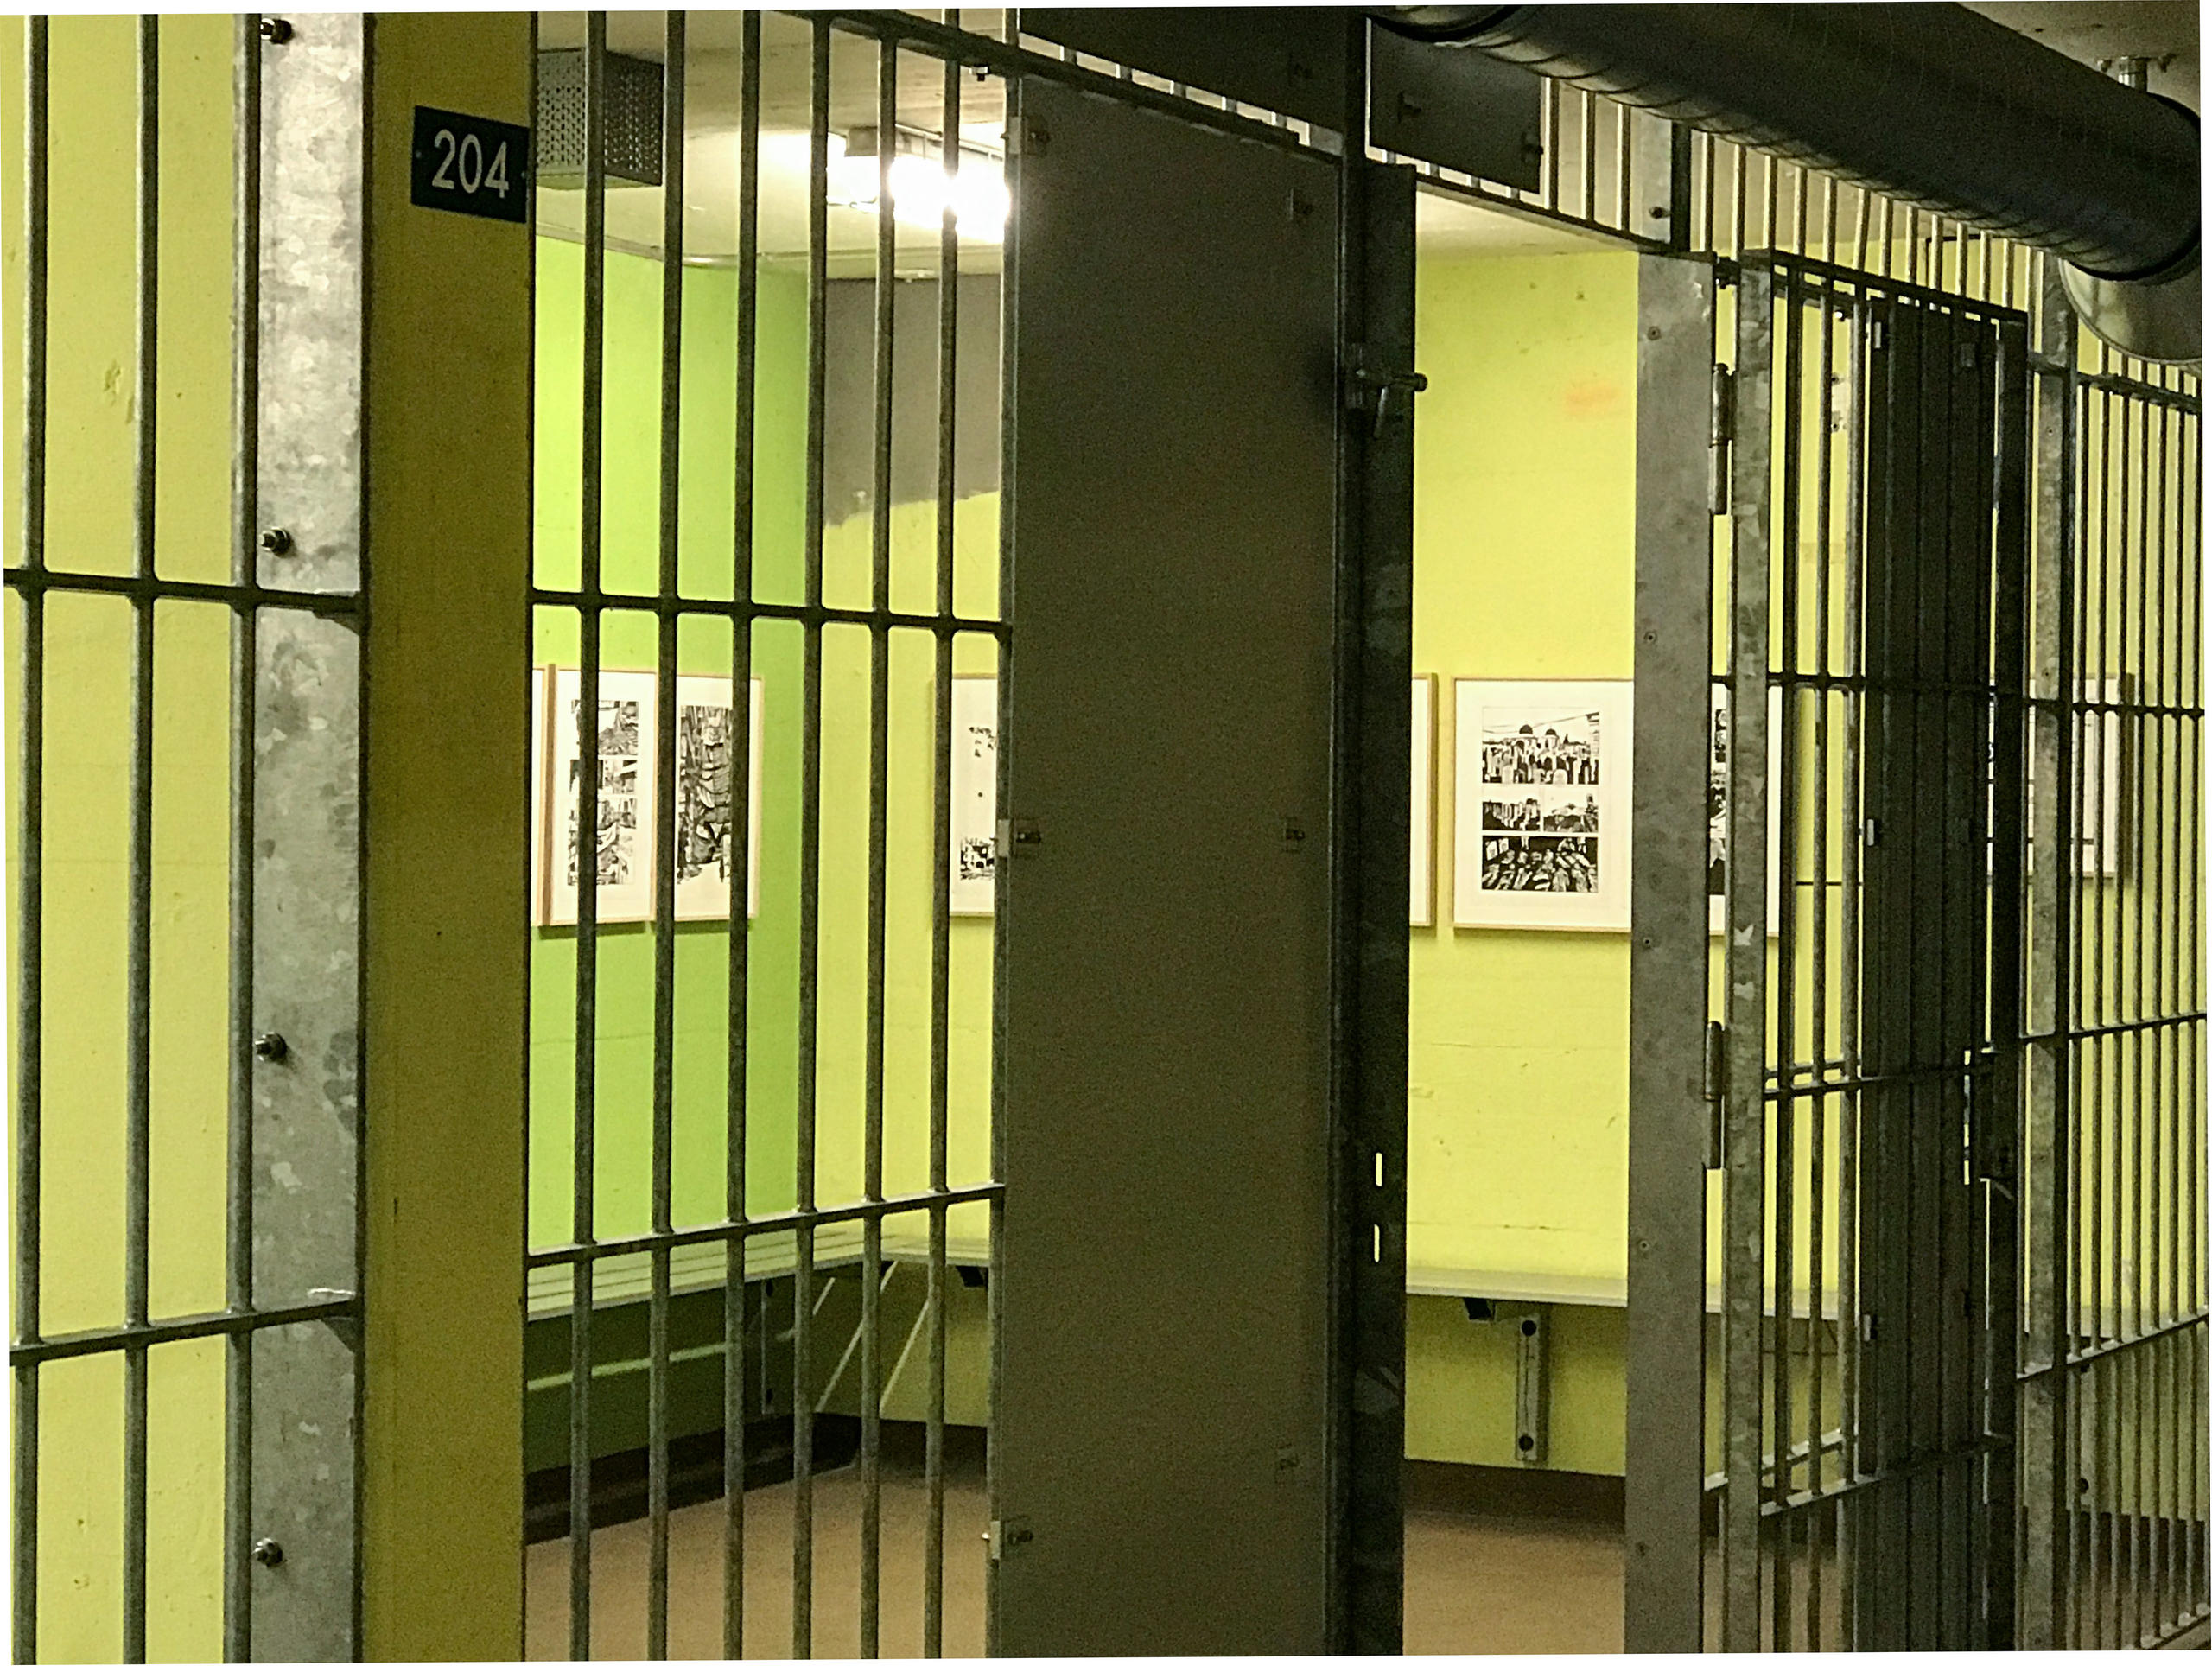 Comics behind prison bars